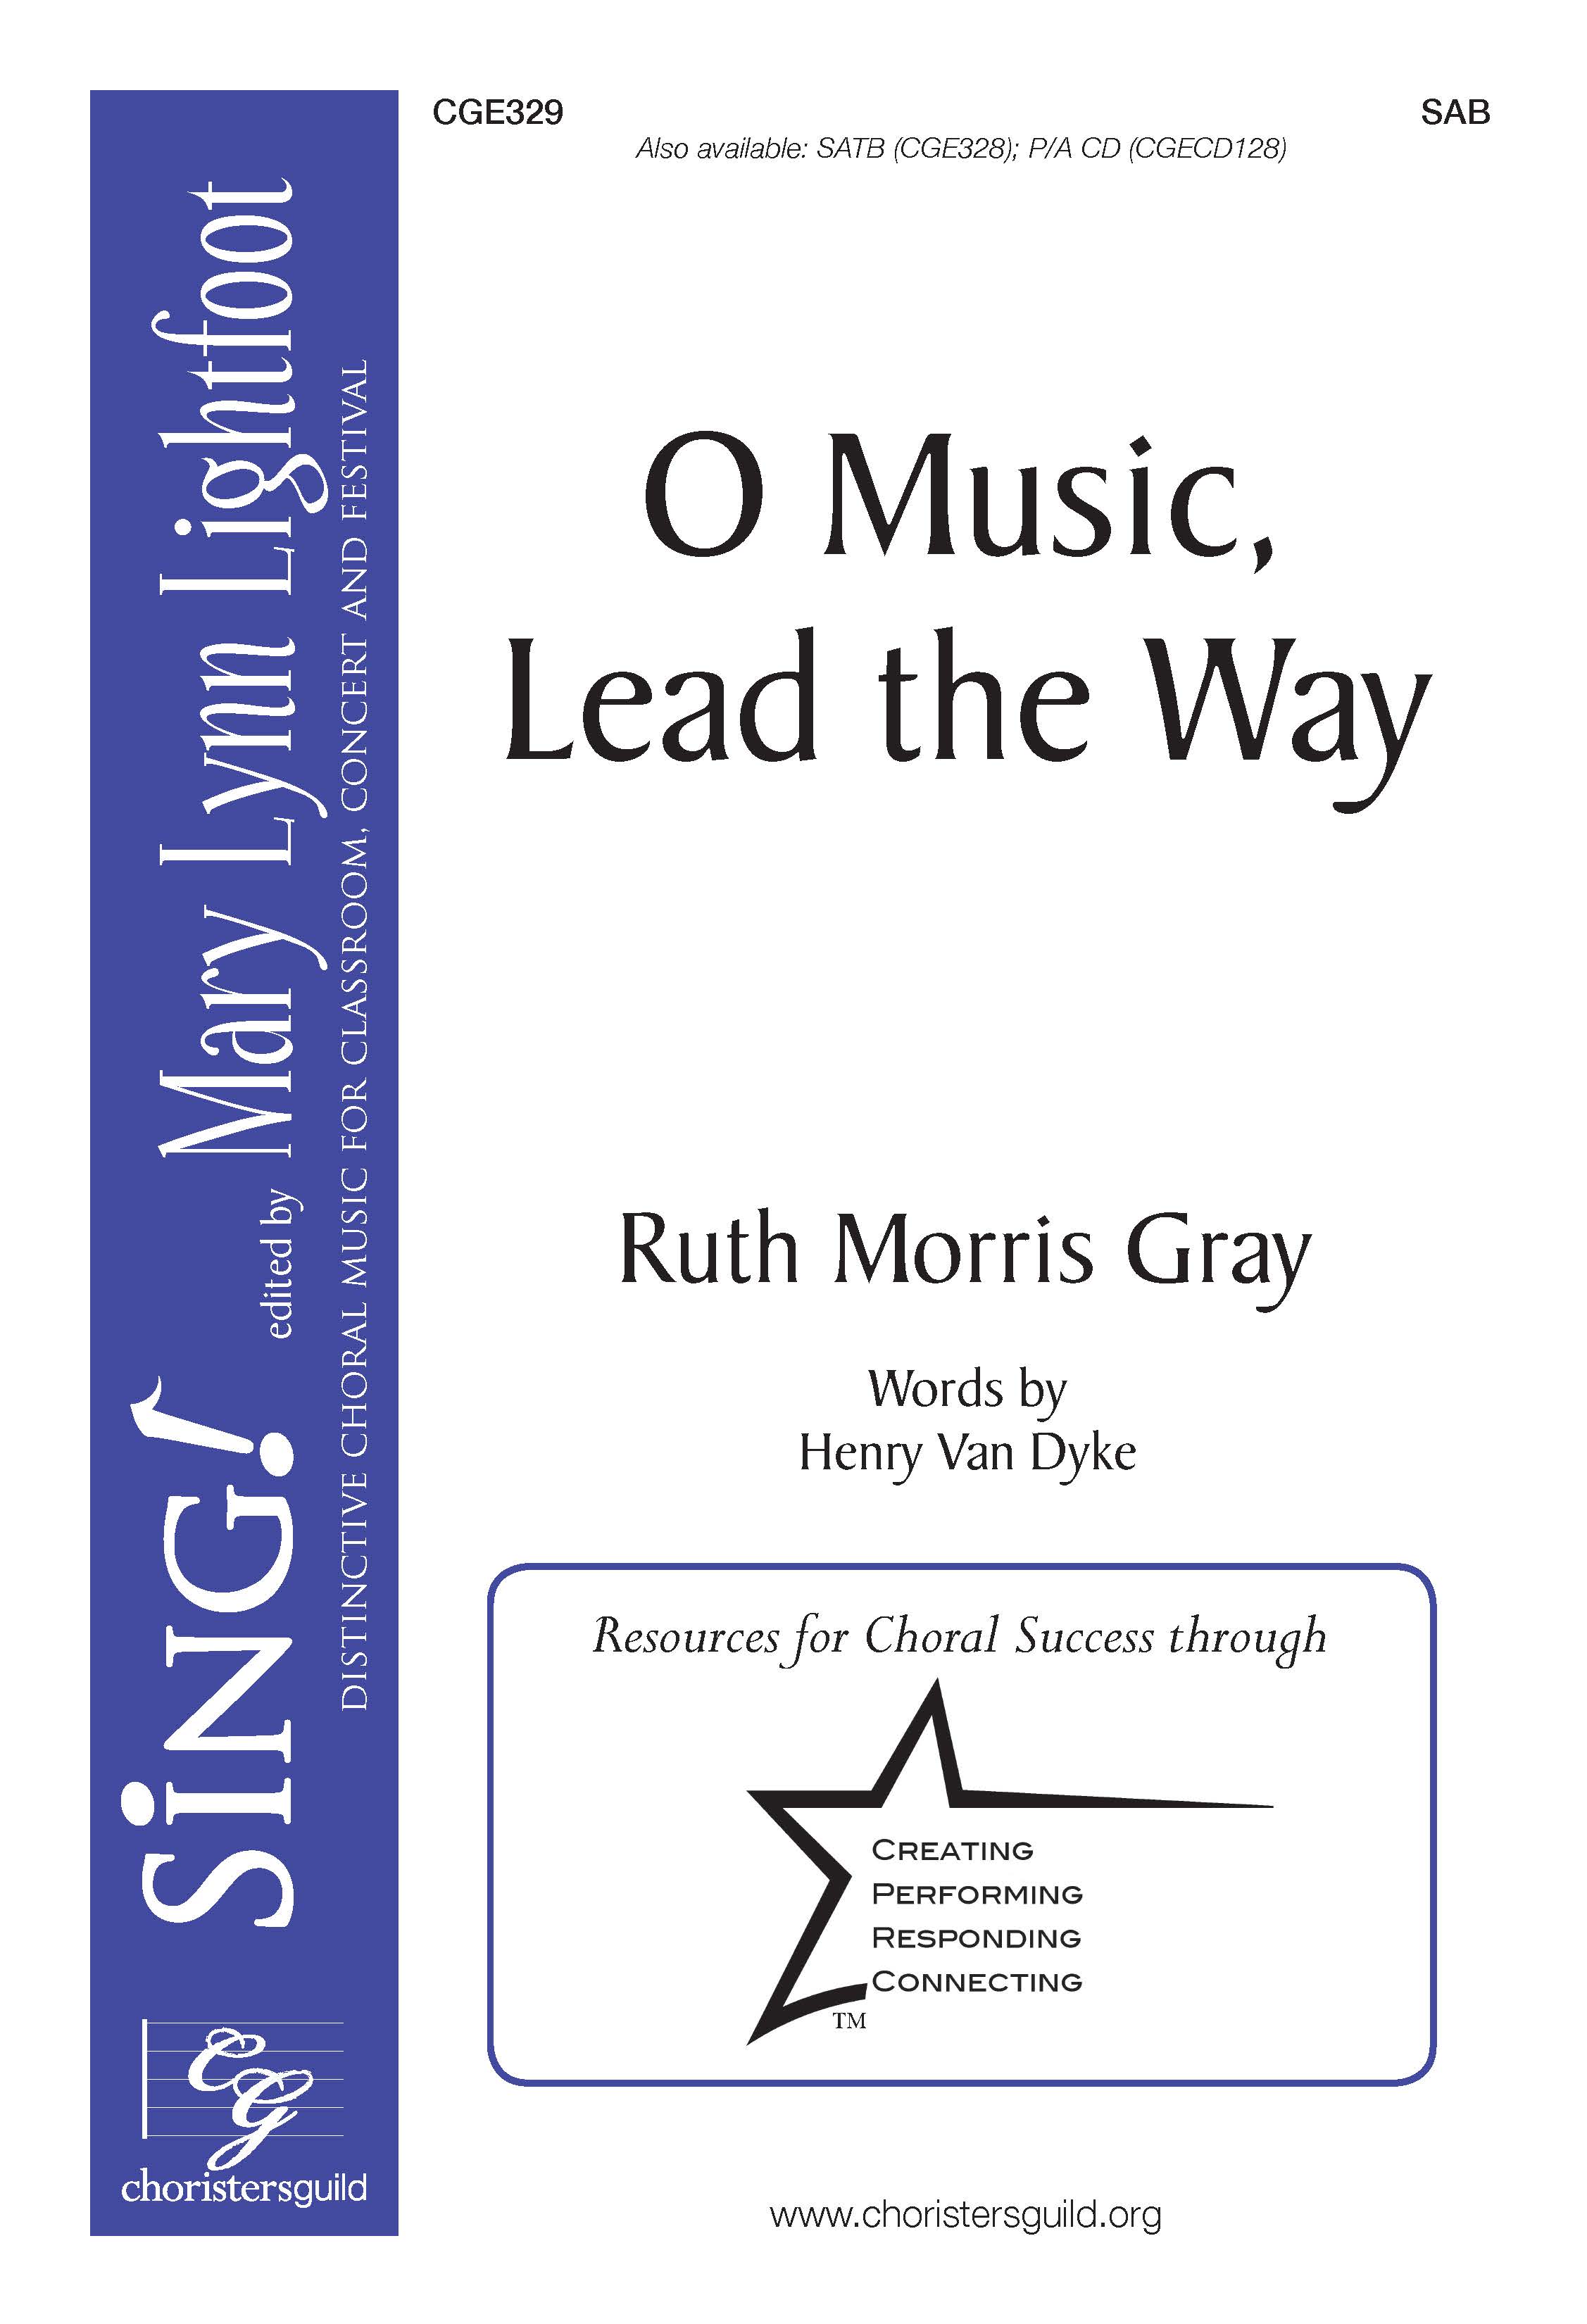 O Music, Lead the Way - SAB